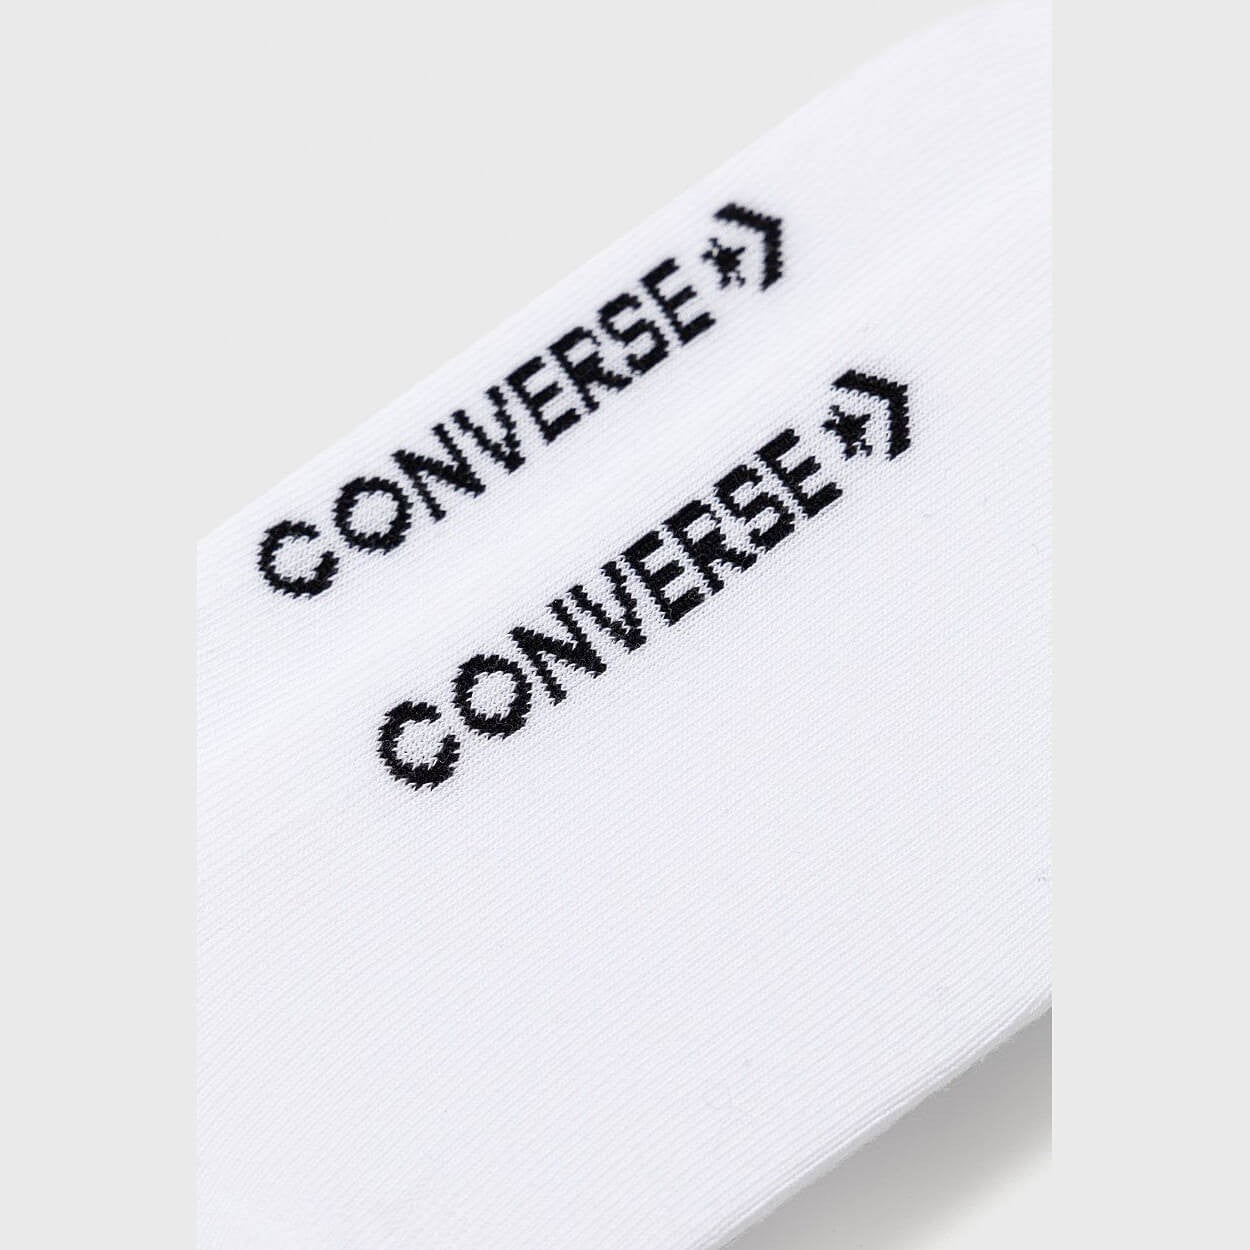 Converse Cons Uni 2 Pack Sock White